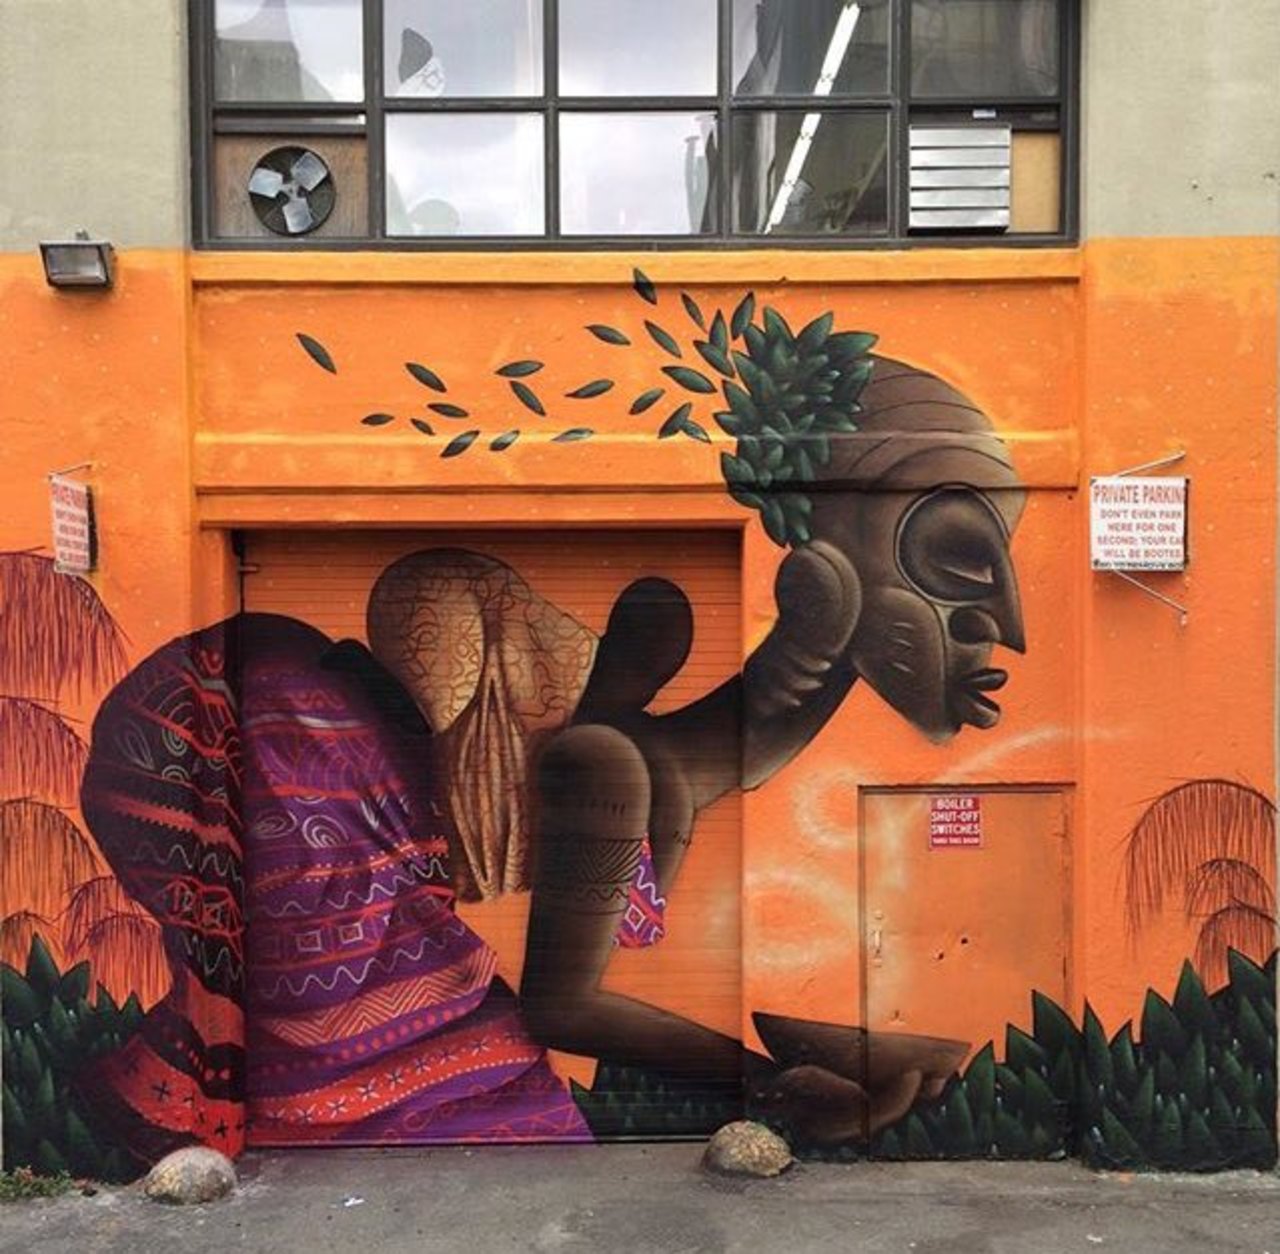 RT @GoogleStreetArt "New Street Art by Alexandre Keto in NYC 

#art #graffiti #mural #streetart https://t.co/LwqBl9t8vc"